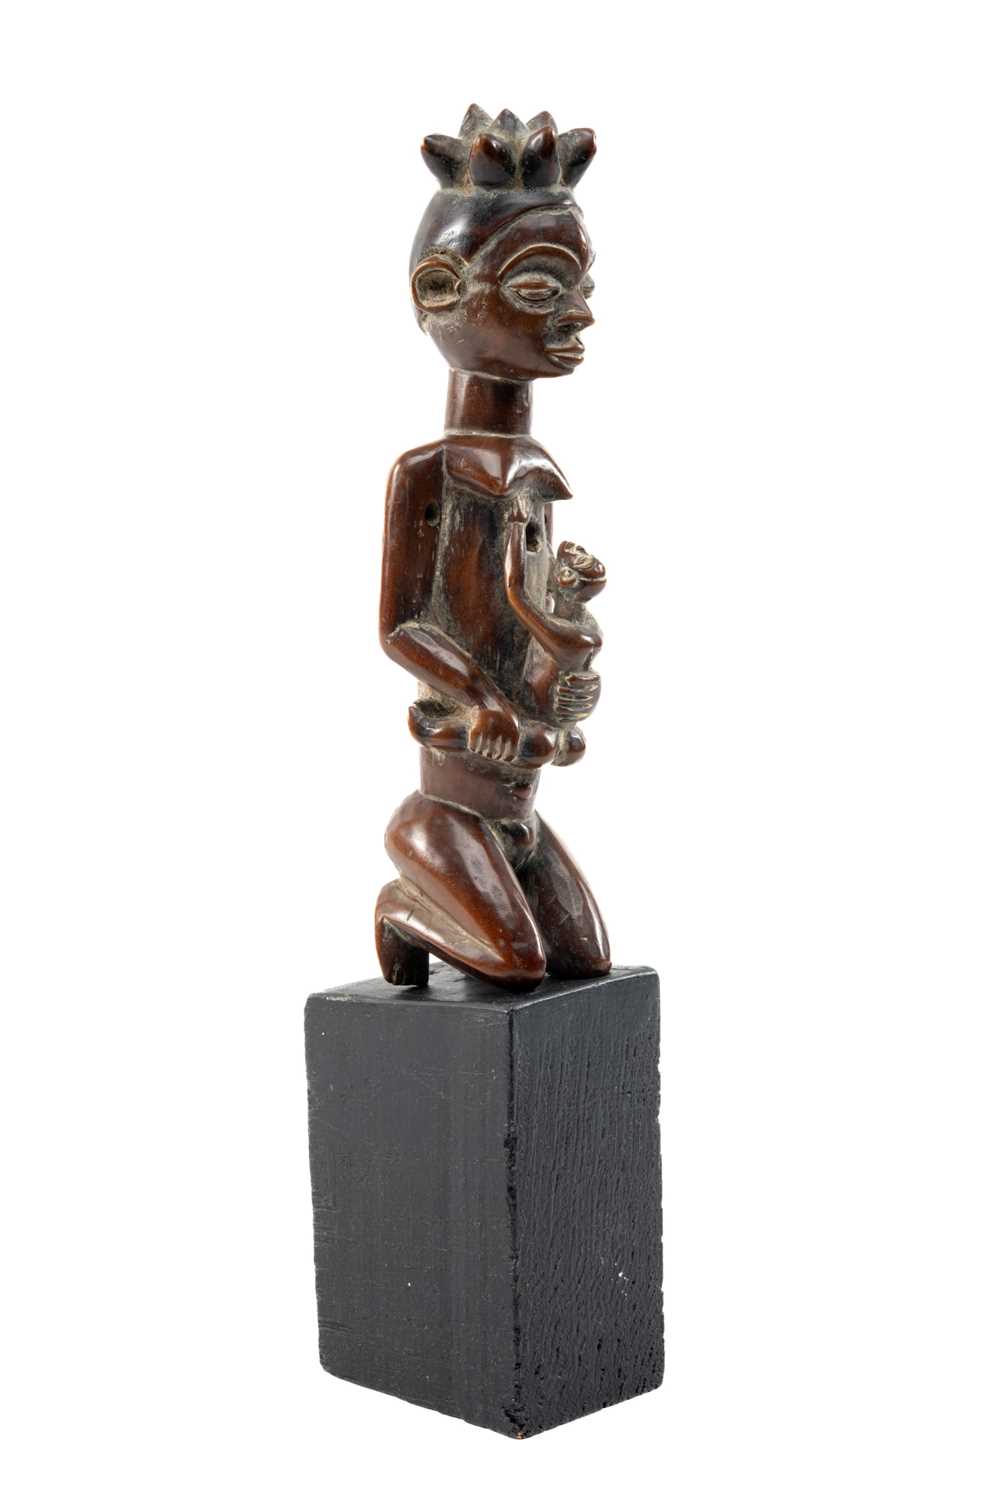 ZOMBO MATERNITY FIGURE, D.R.Congo, the kneeling figure holding straddling infant to abdomen,